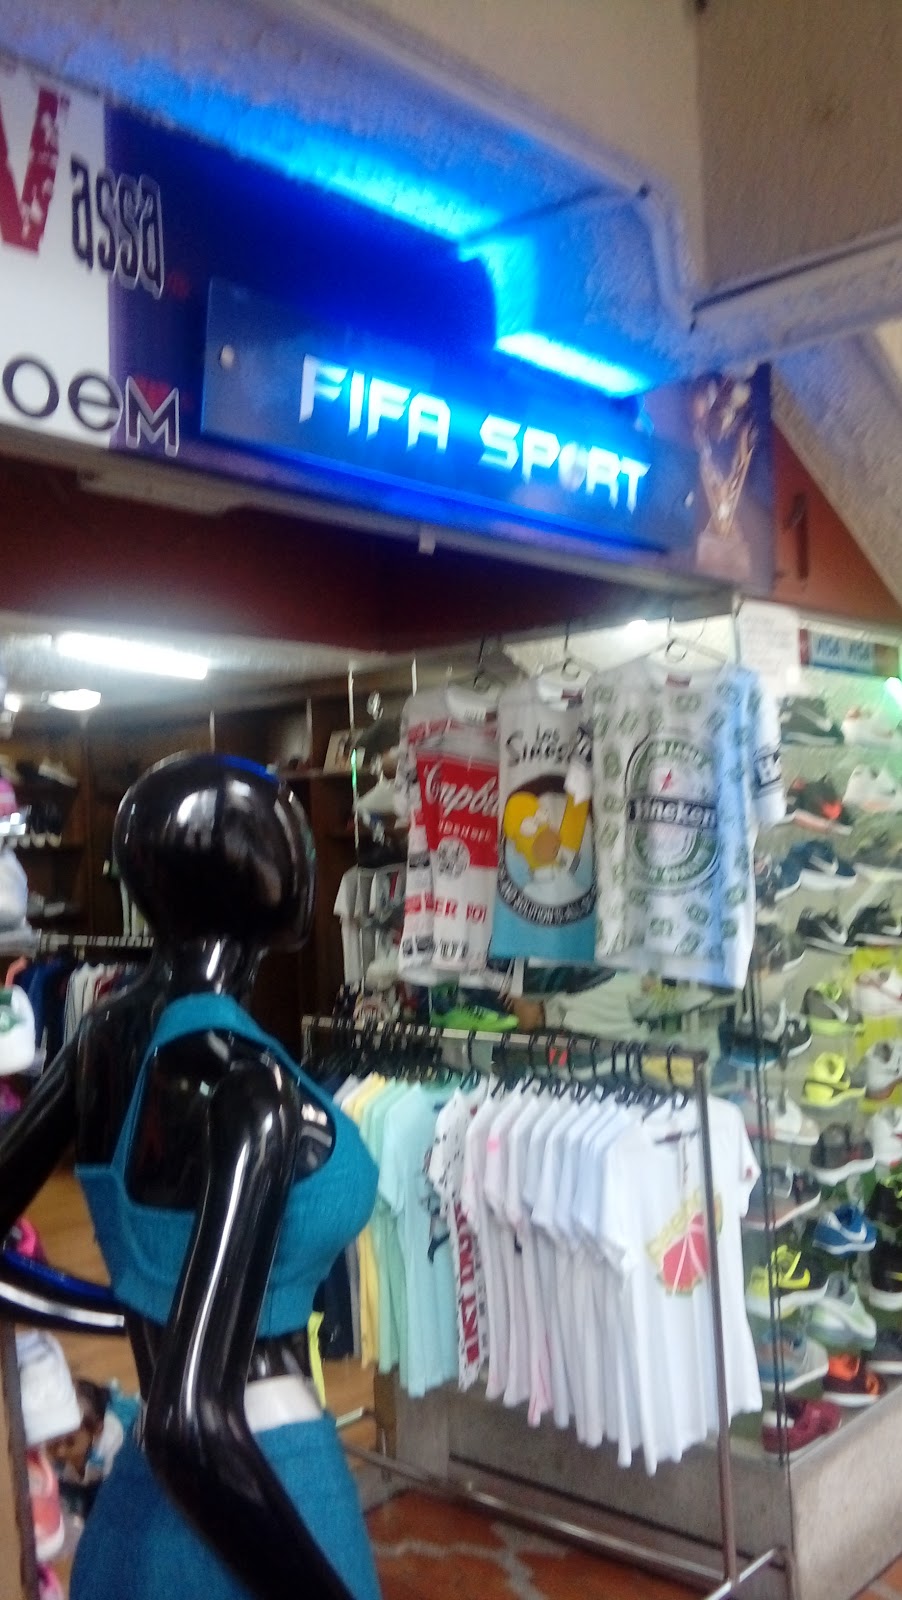 Fifa Sport